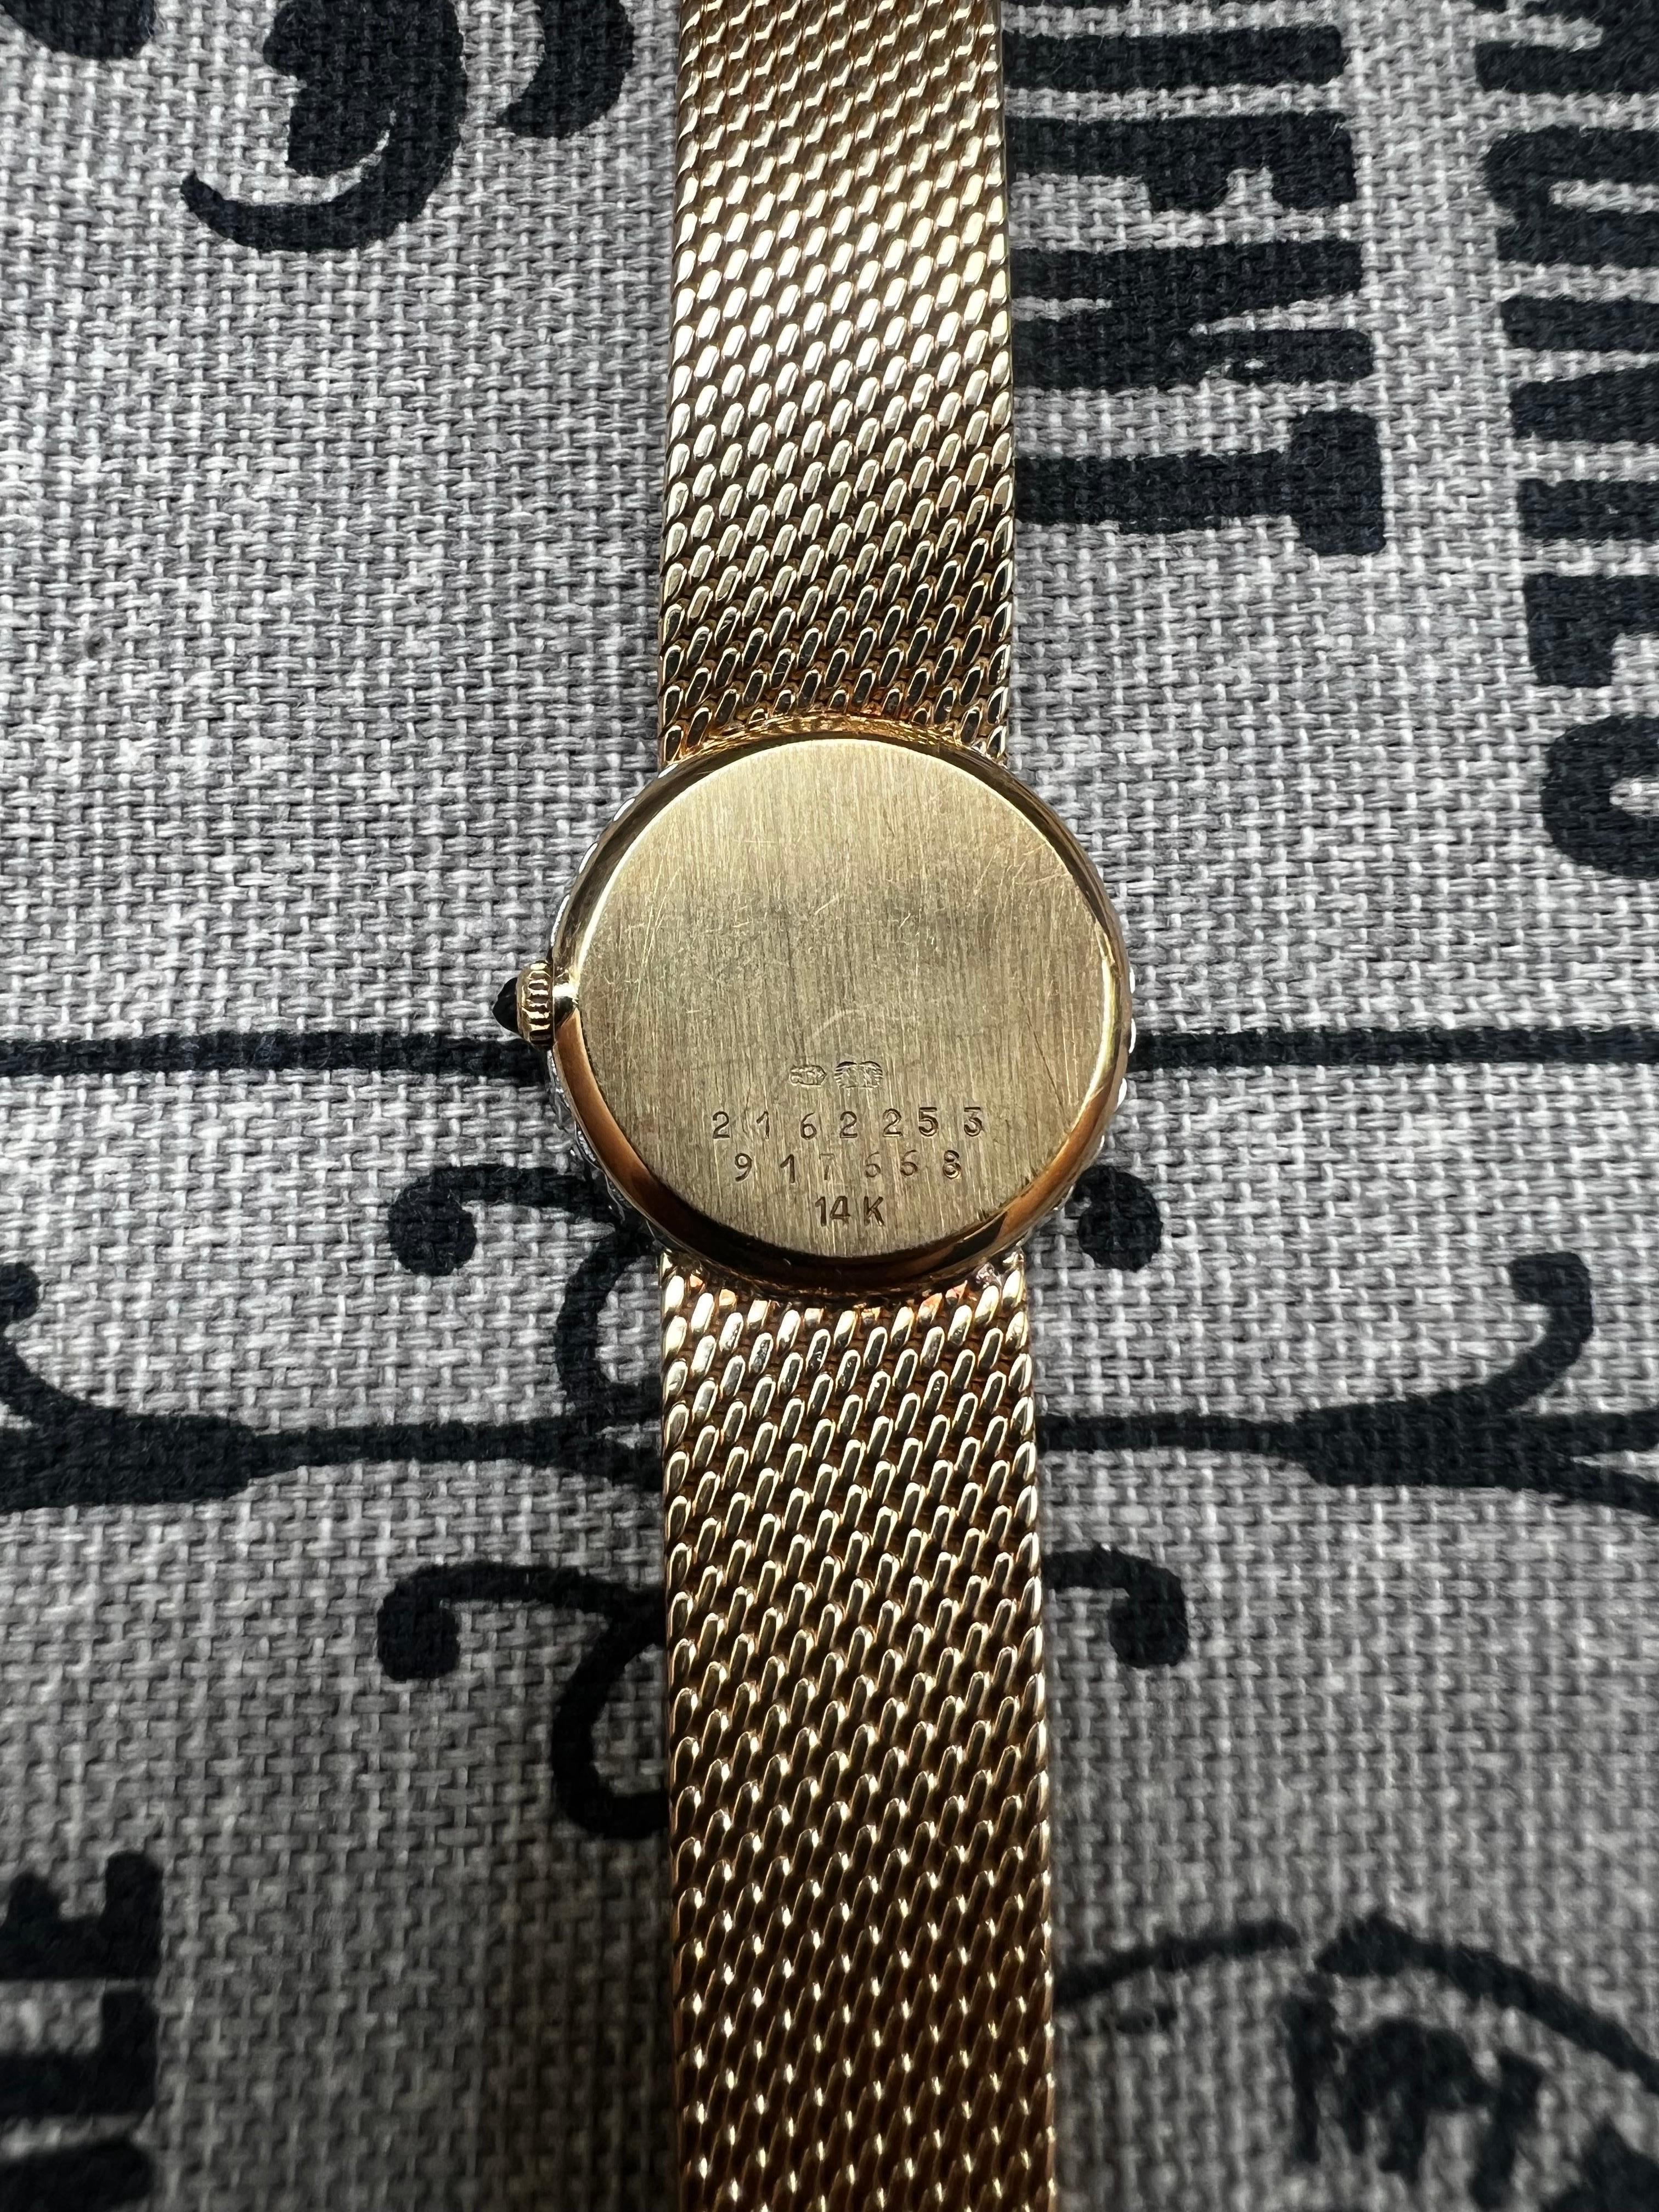 Concord Yellow Gold & Diamond Wristwatch Ref. 2162253 1